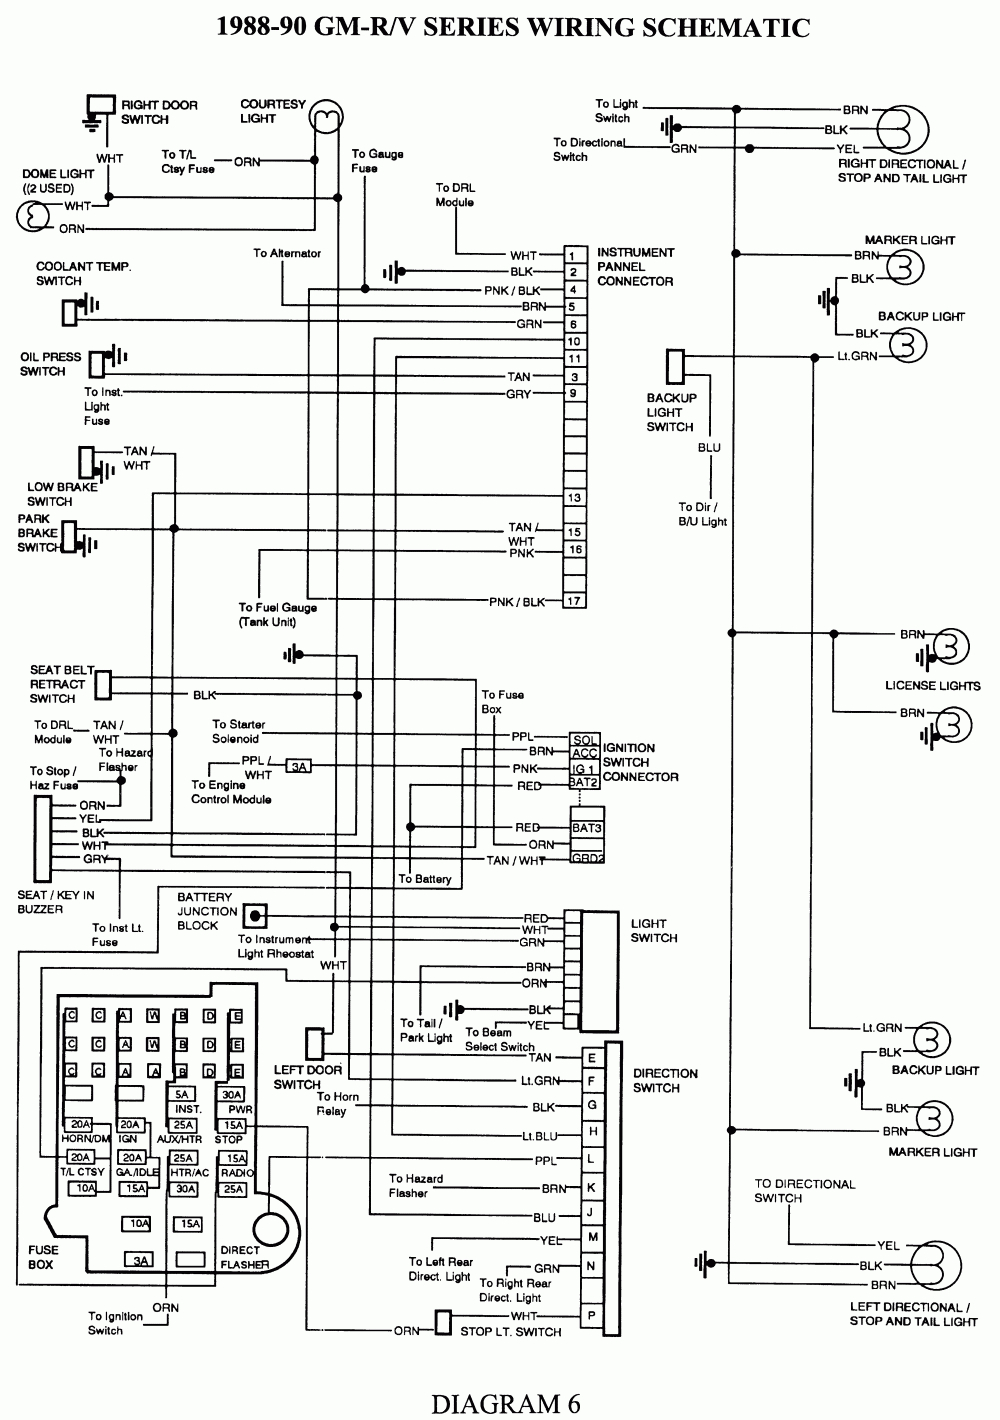 Wiring Diagram For 1998 Chevy Silverado - Wiring Diagram Data Oreo - Chevy Silverado Trailer Wiring Diagram